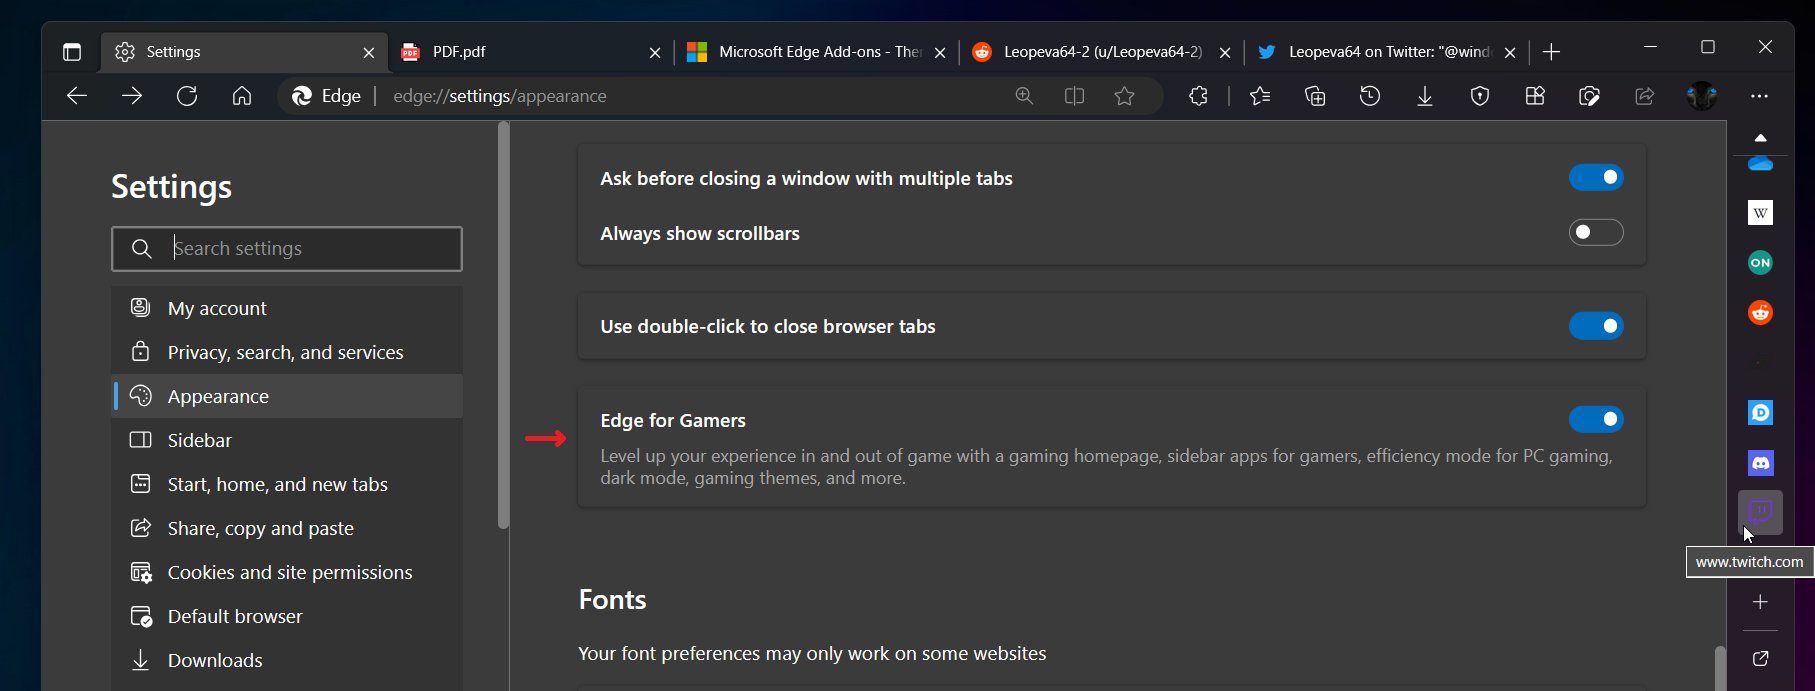 Edge for Gamers Mode option on Microsoft Edge computer